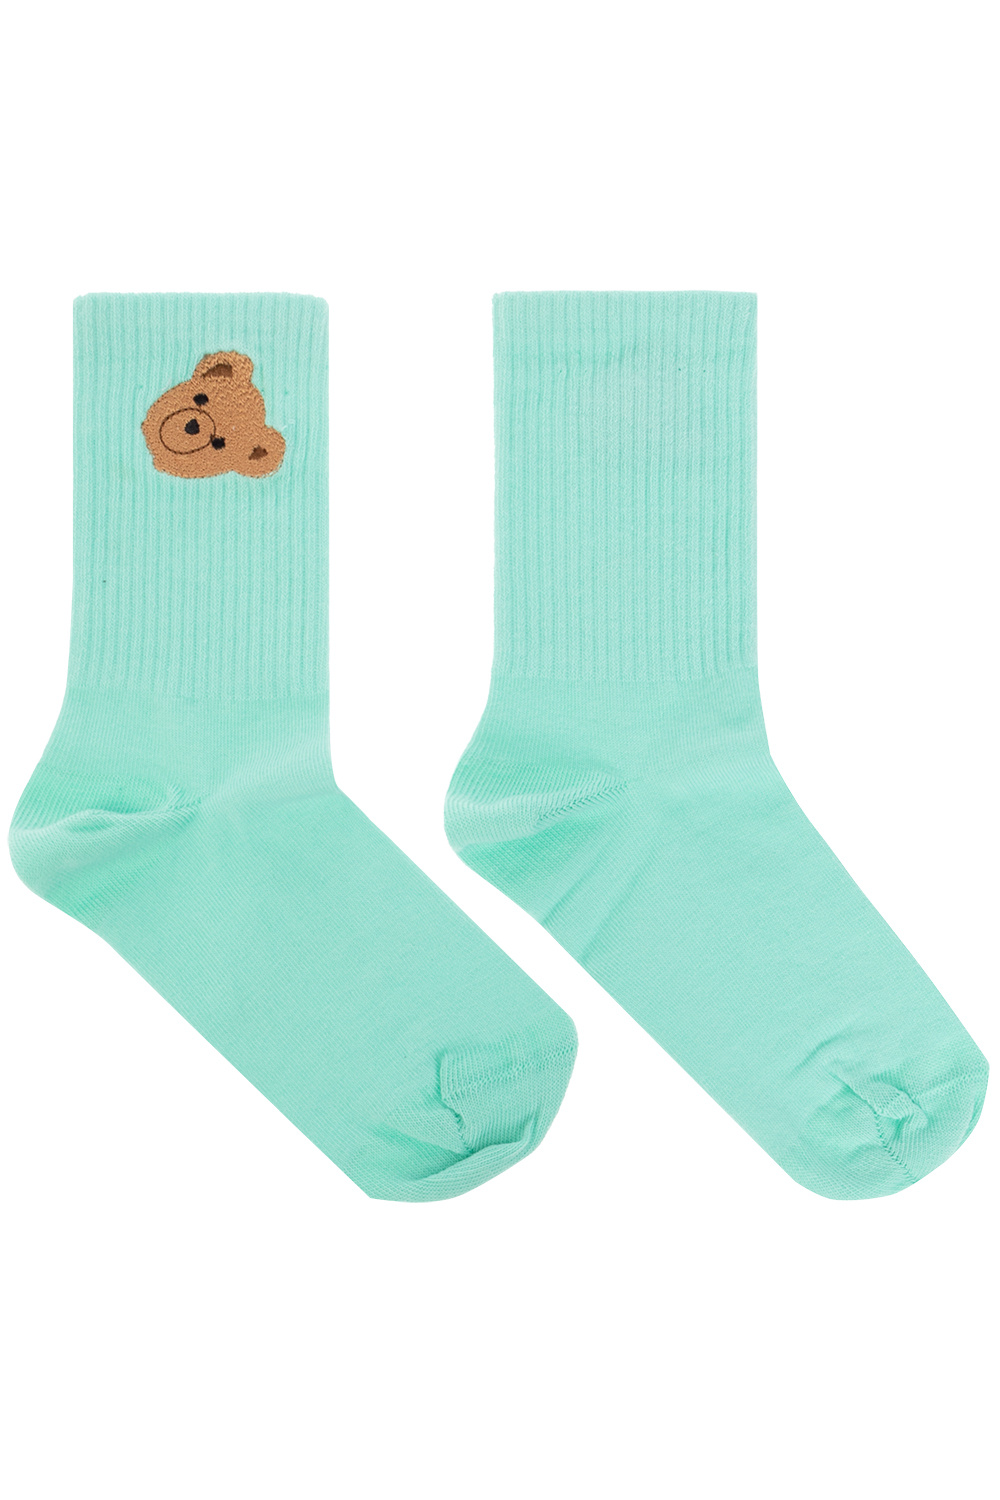 Socks with teddy bear Palm Angels Kids - Vitkac Australia